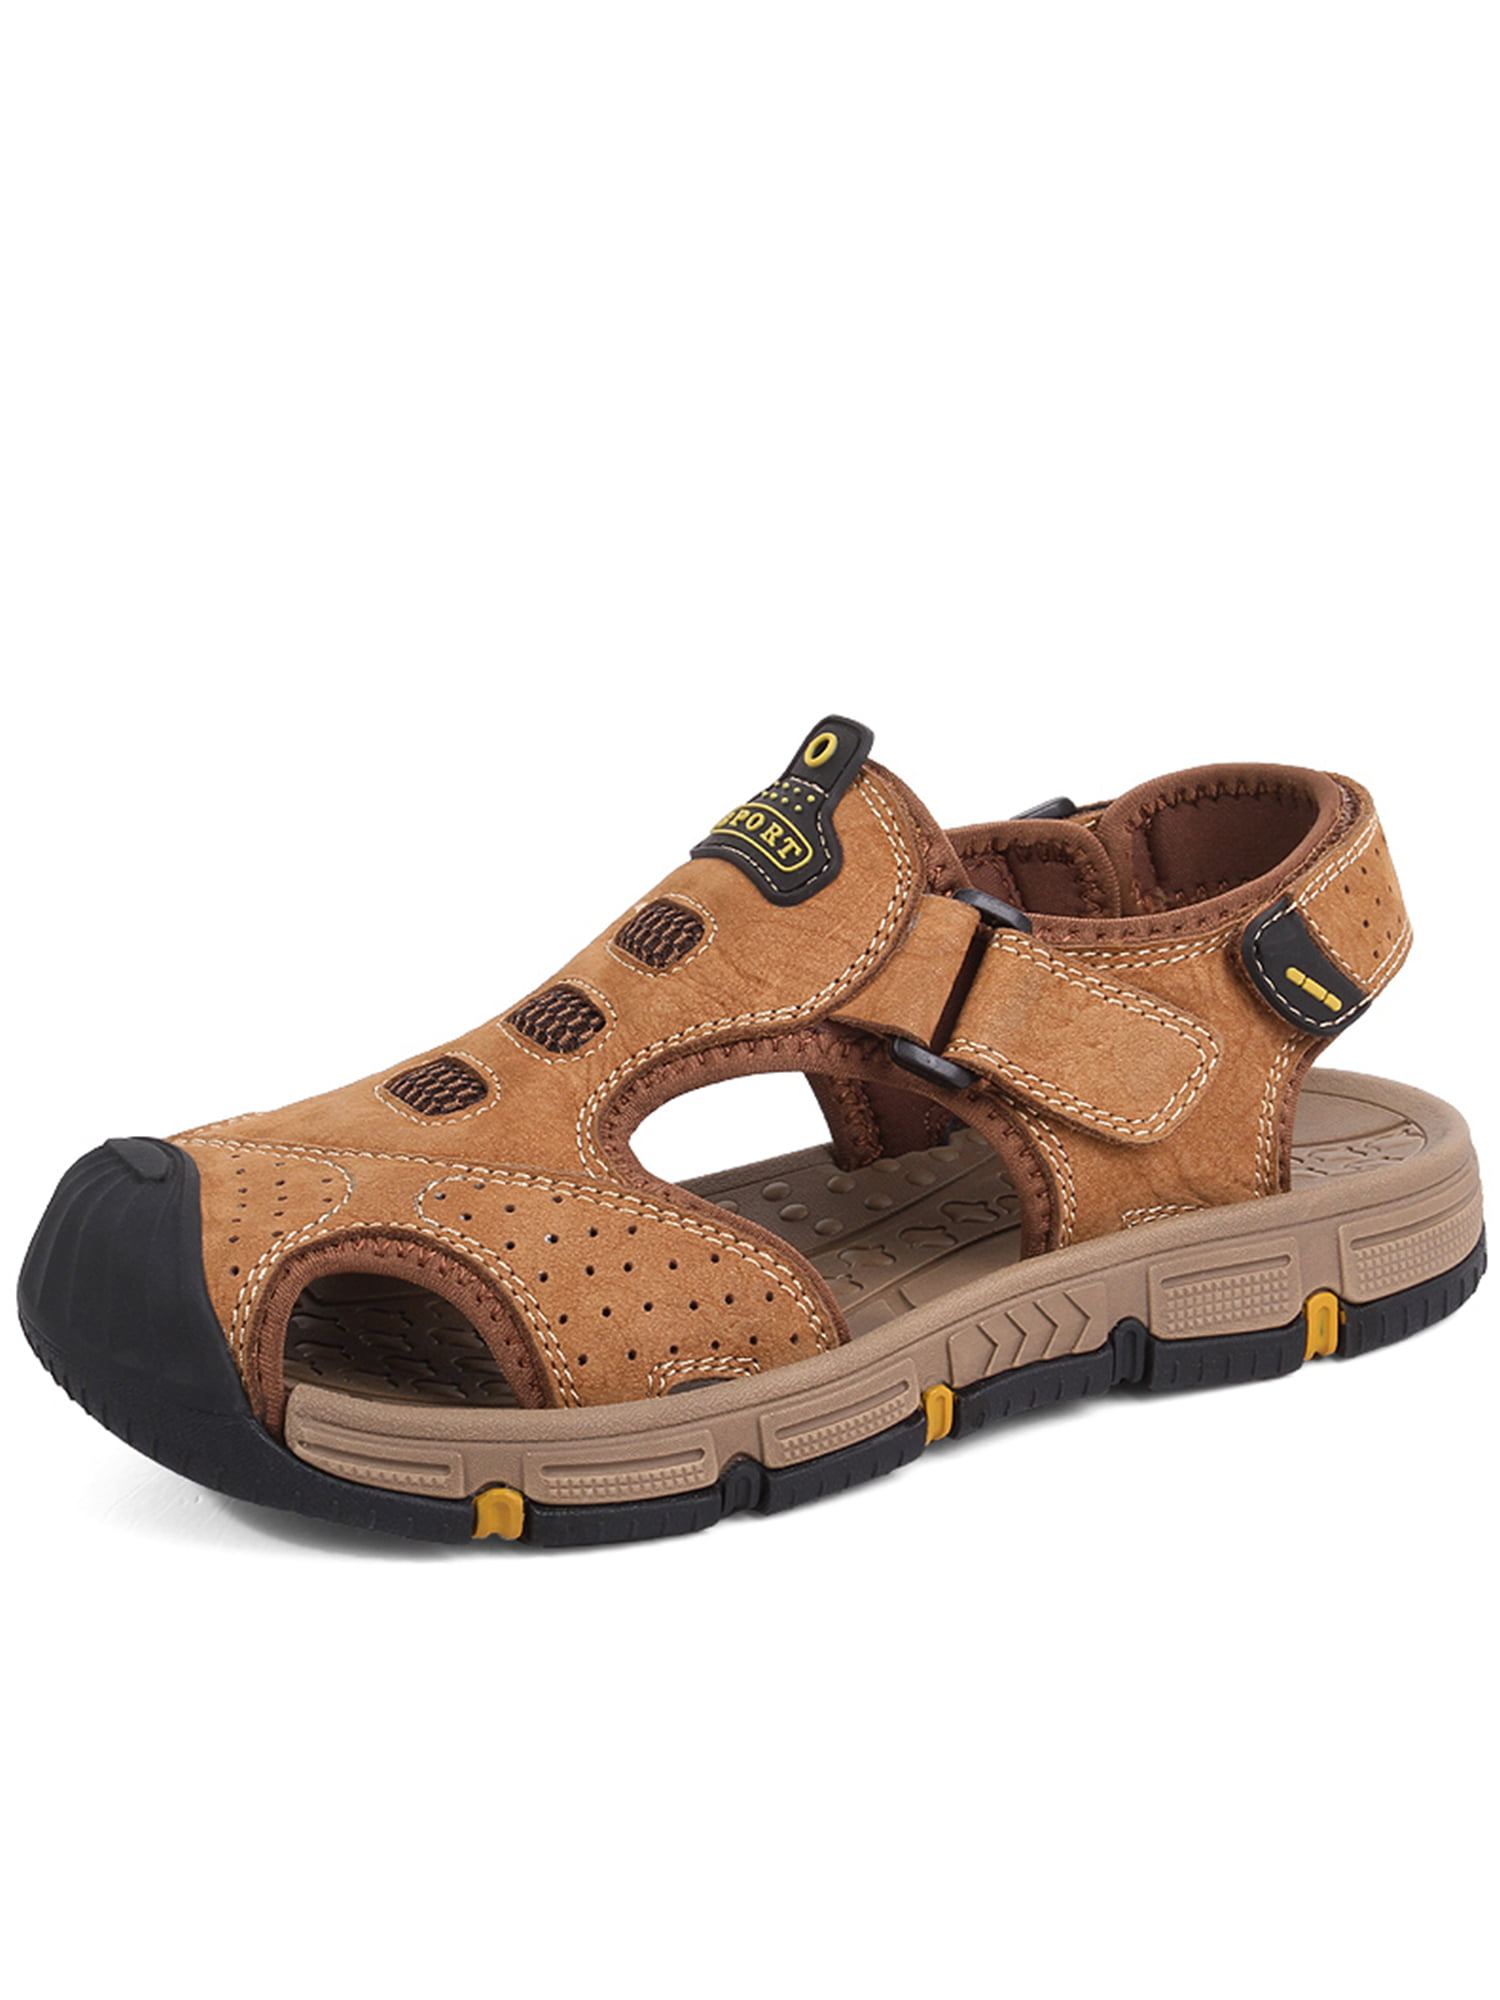 Own Shoe - OwnShoe Mens Hiking Sandals Waterproof Leather Fisherman ...